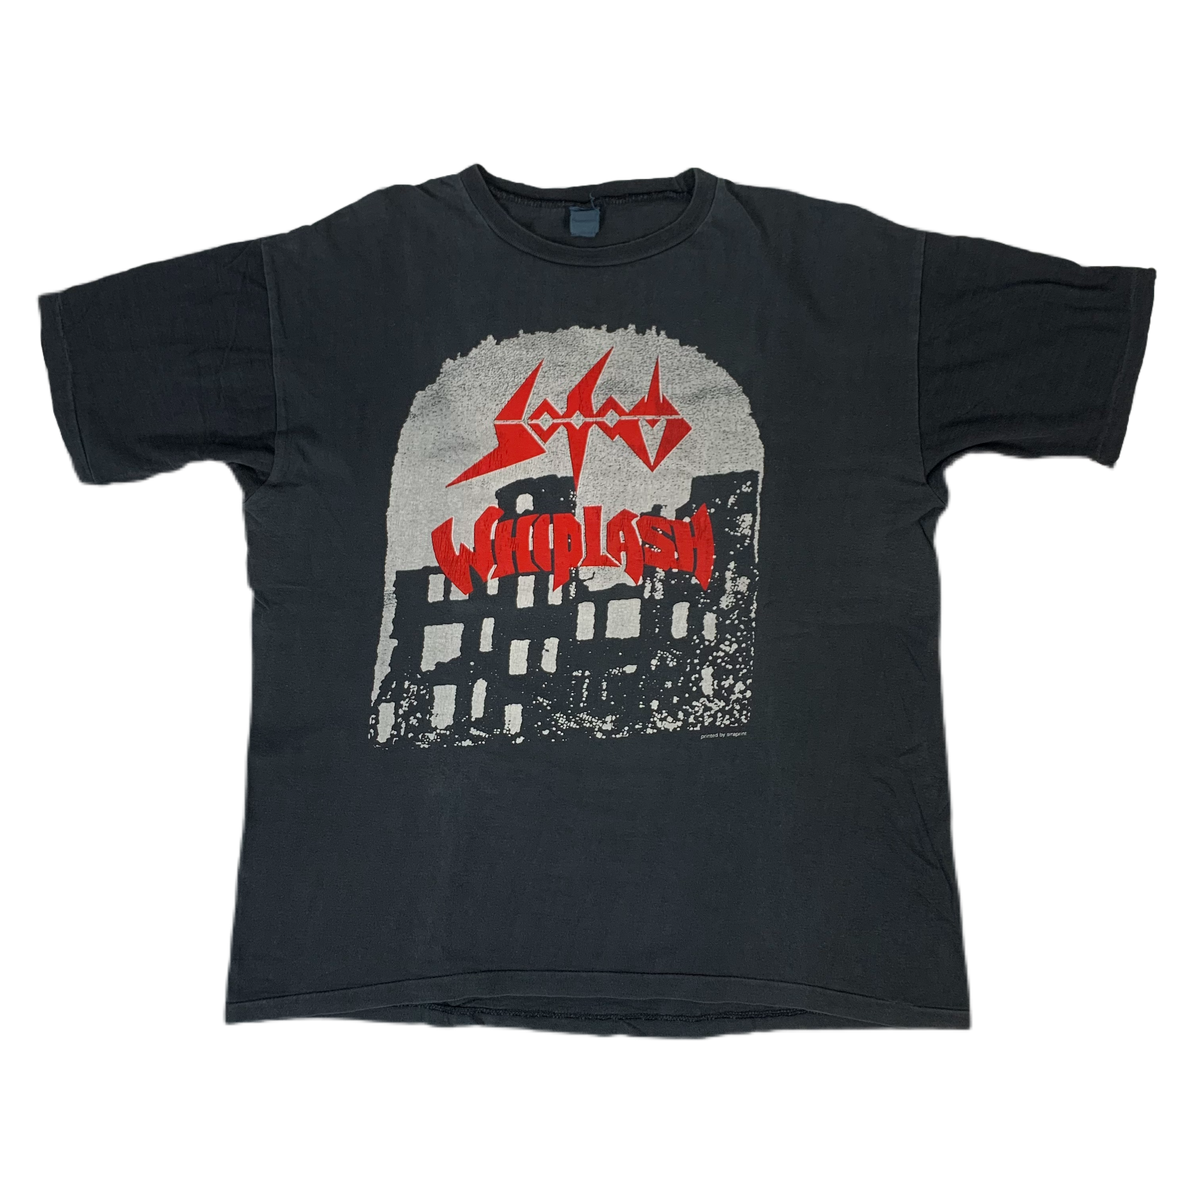 Vintage Sodom Whiplash &quot;Sodomania&quot; T-Shirt